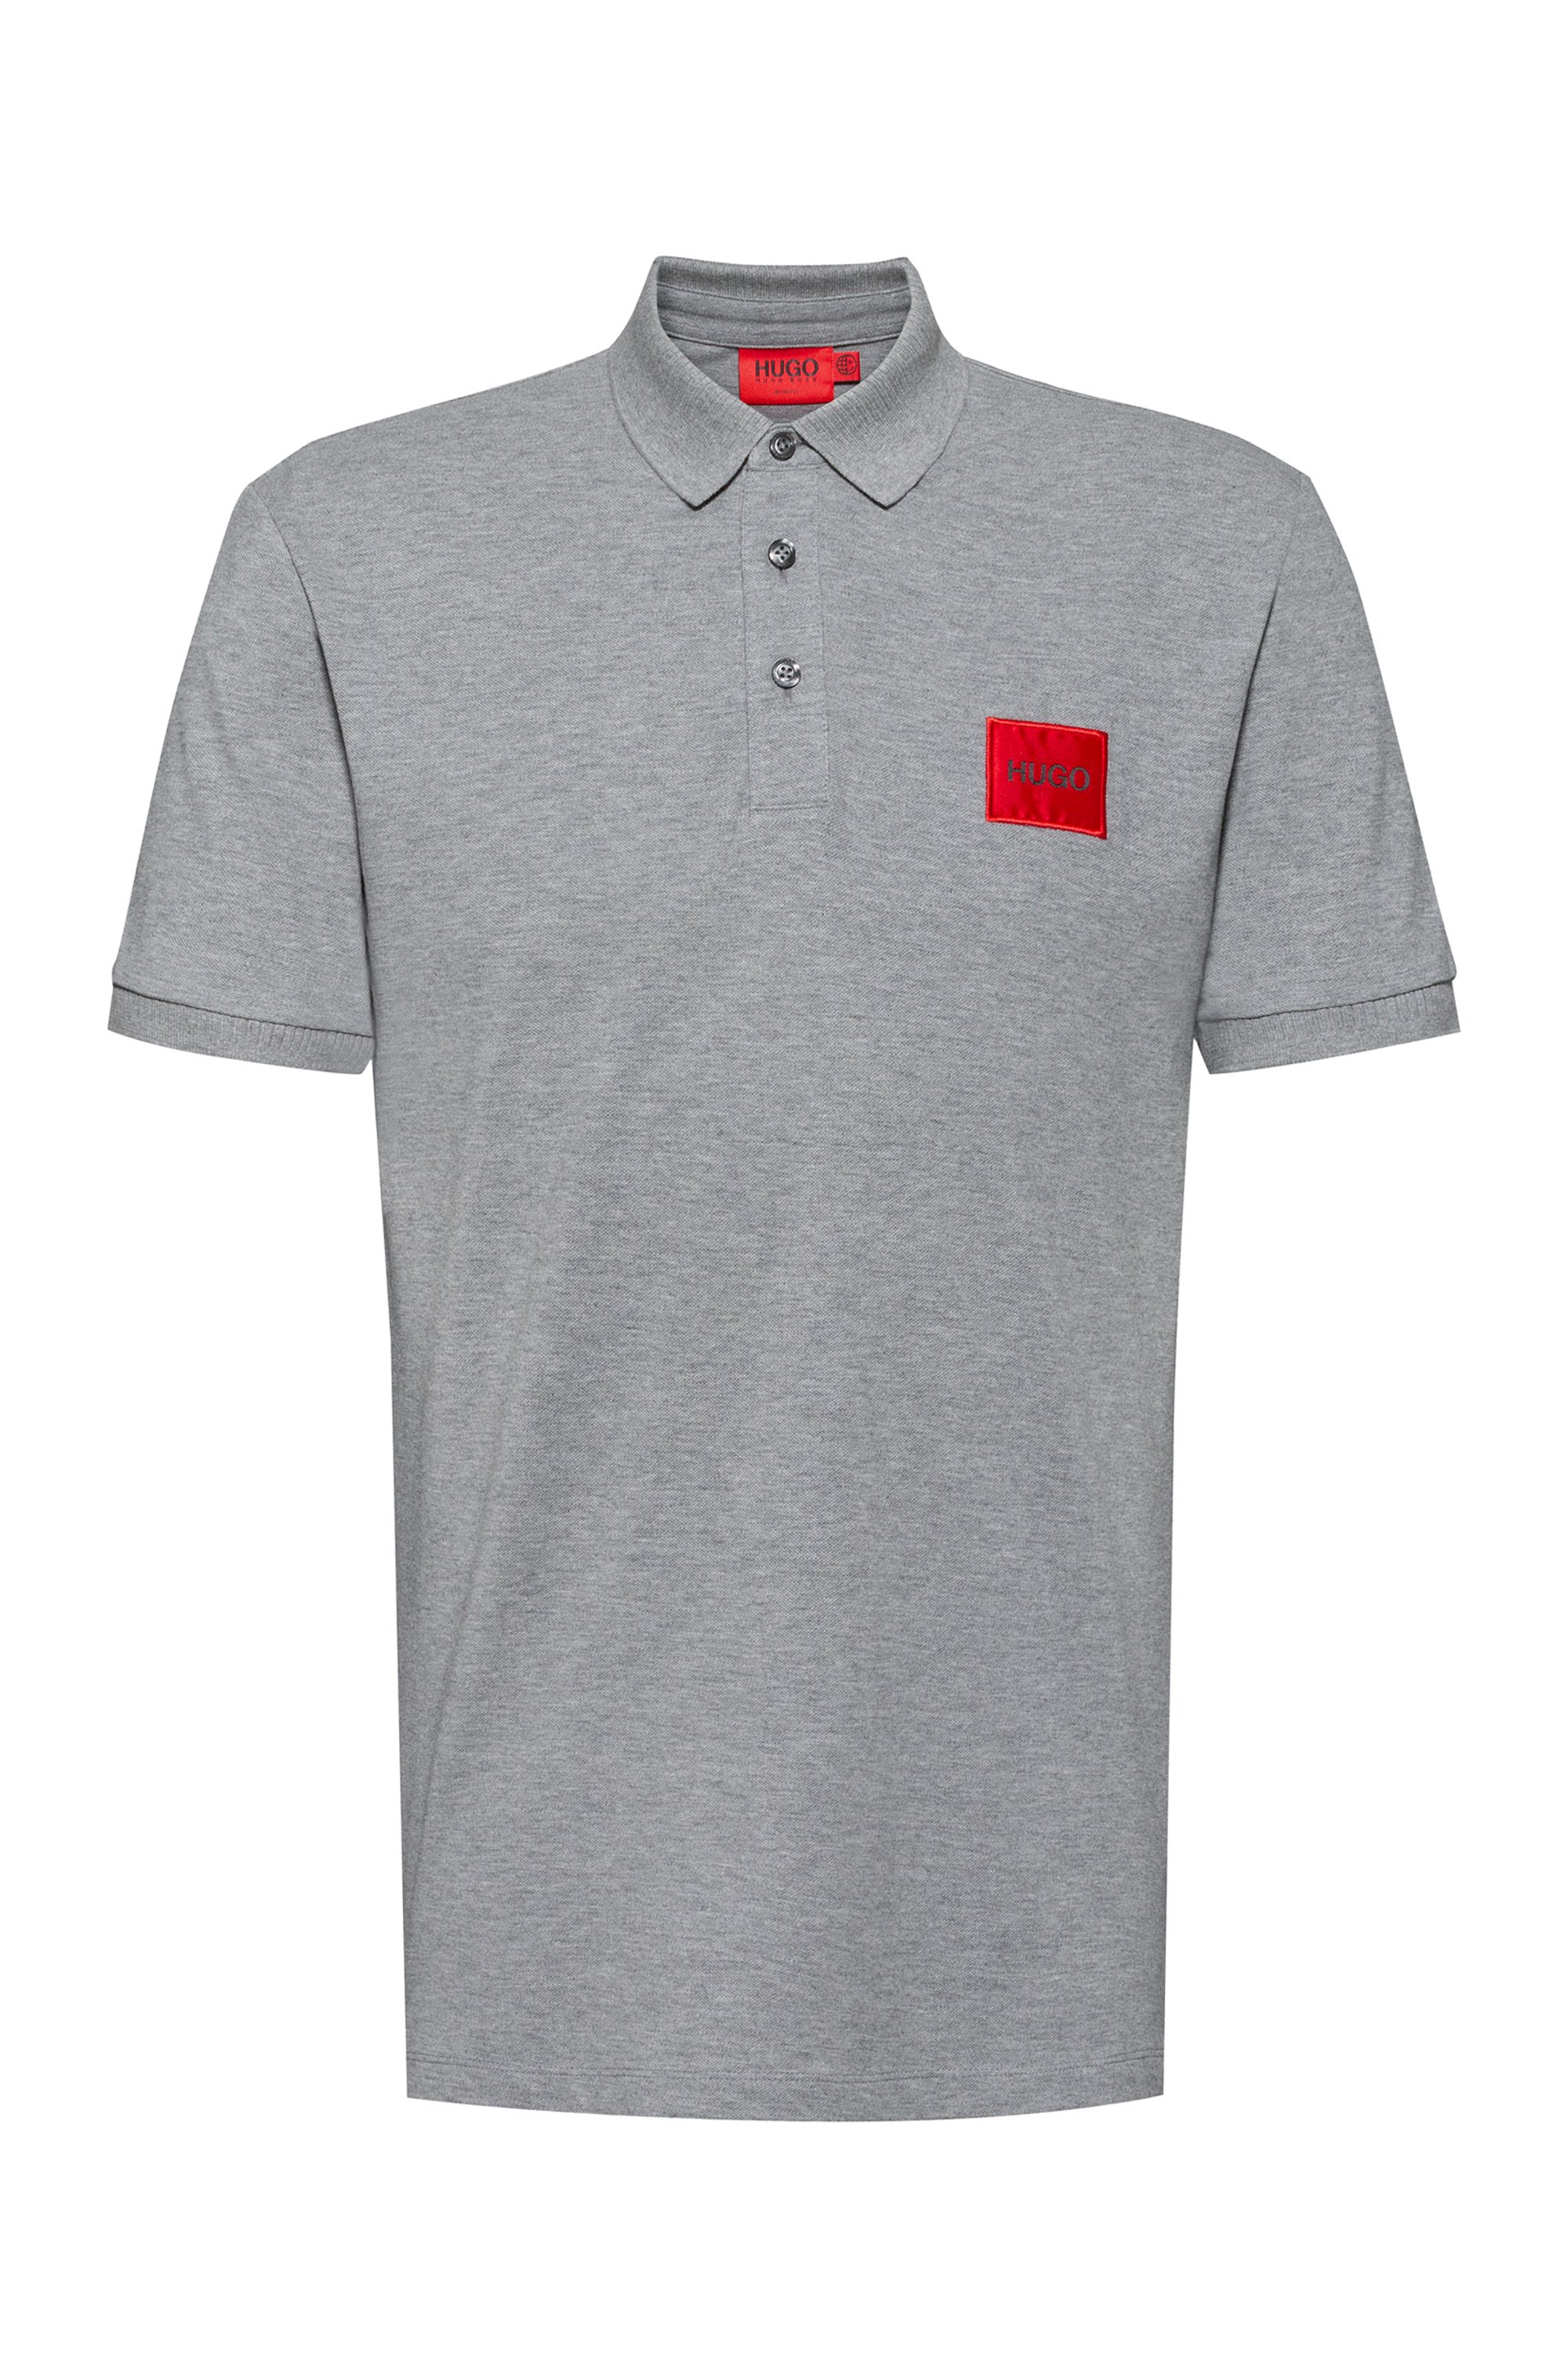 Slim-fit cotton-piqué polo shirt with logo patch, Grey